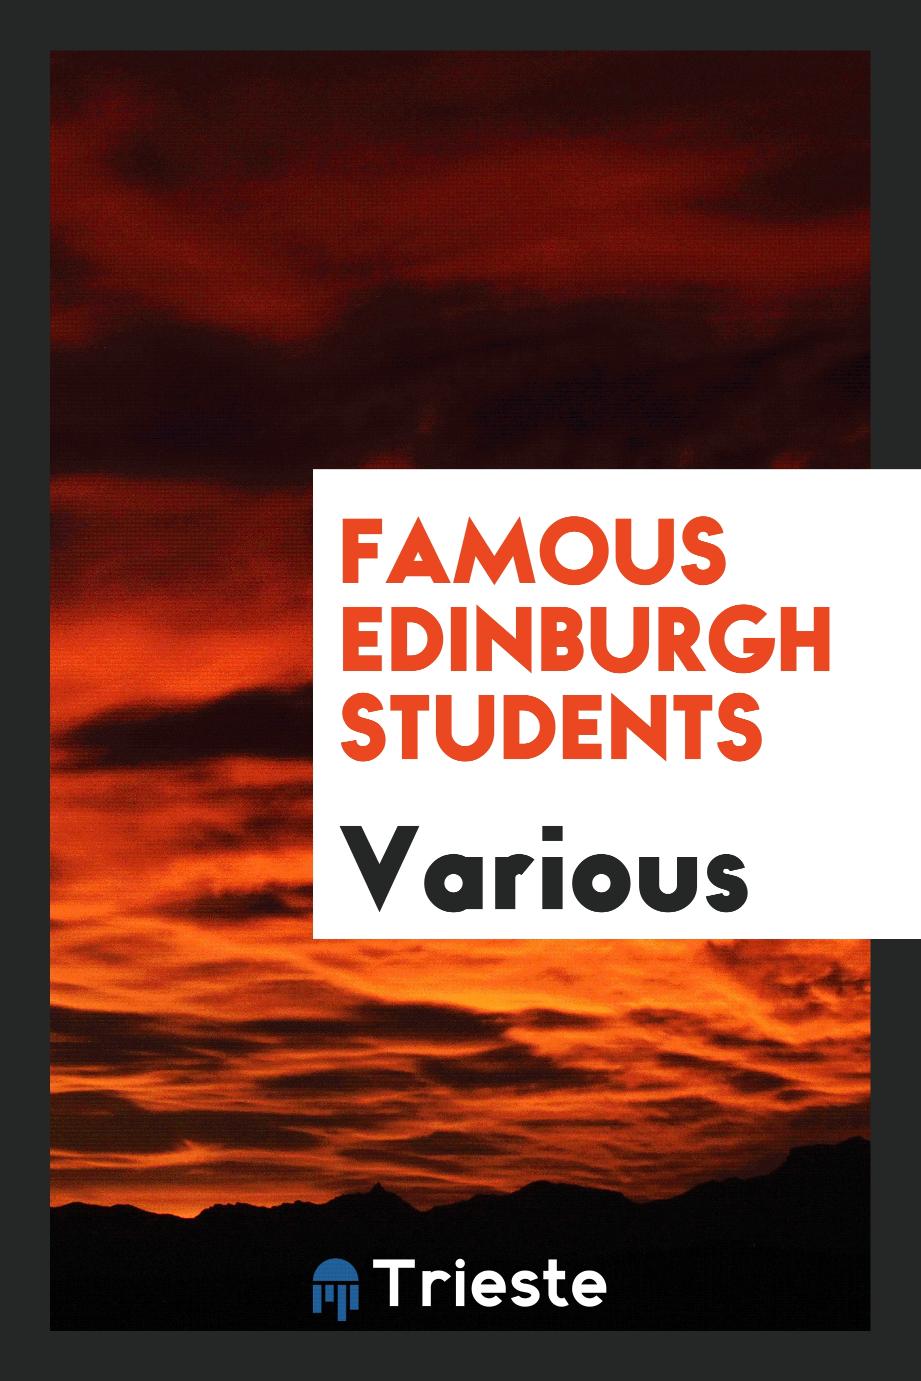 Famous Edinburgh students